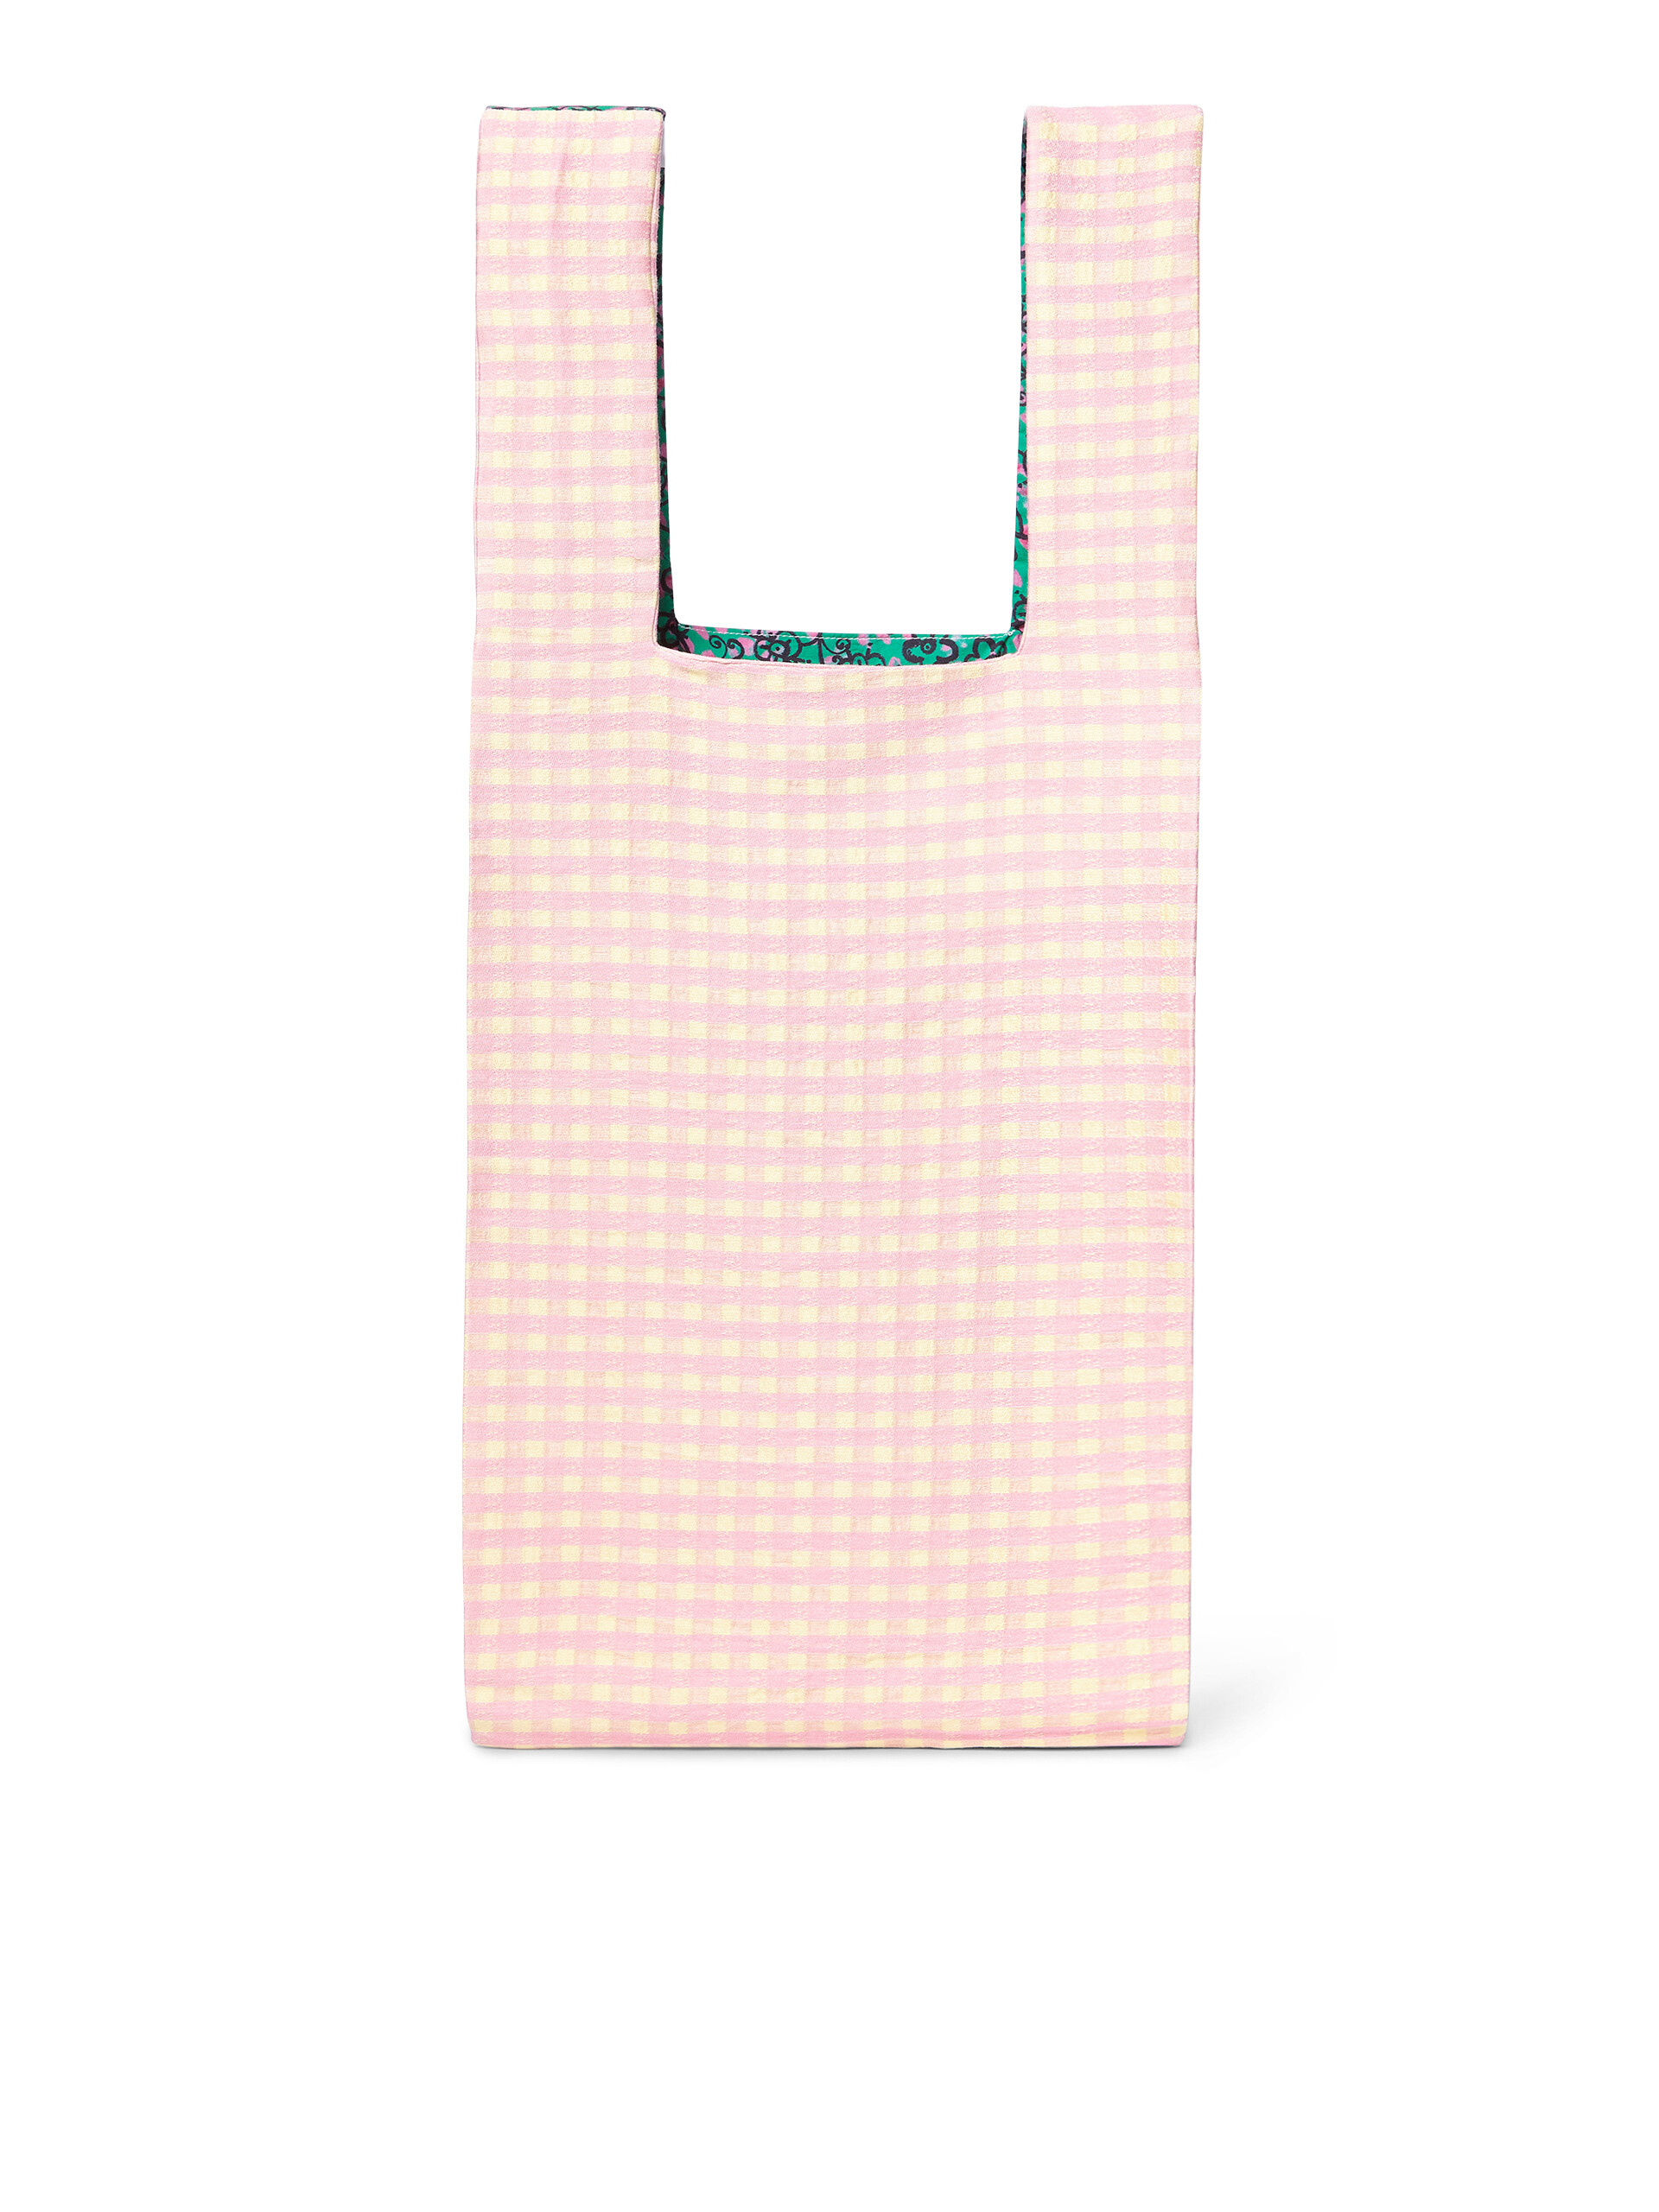 MARNI MARKET cotton shopping bag with abstract and check print - Shopping Bags - Image 3